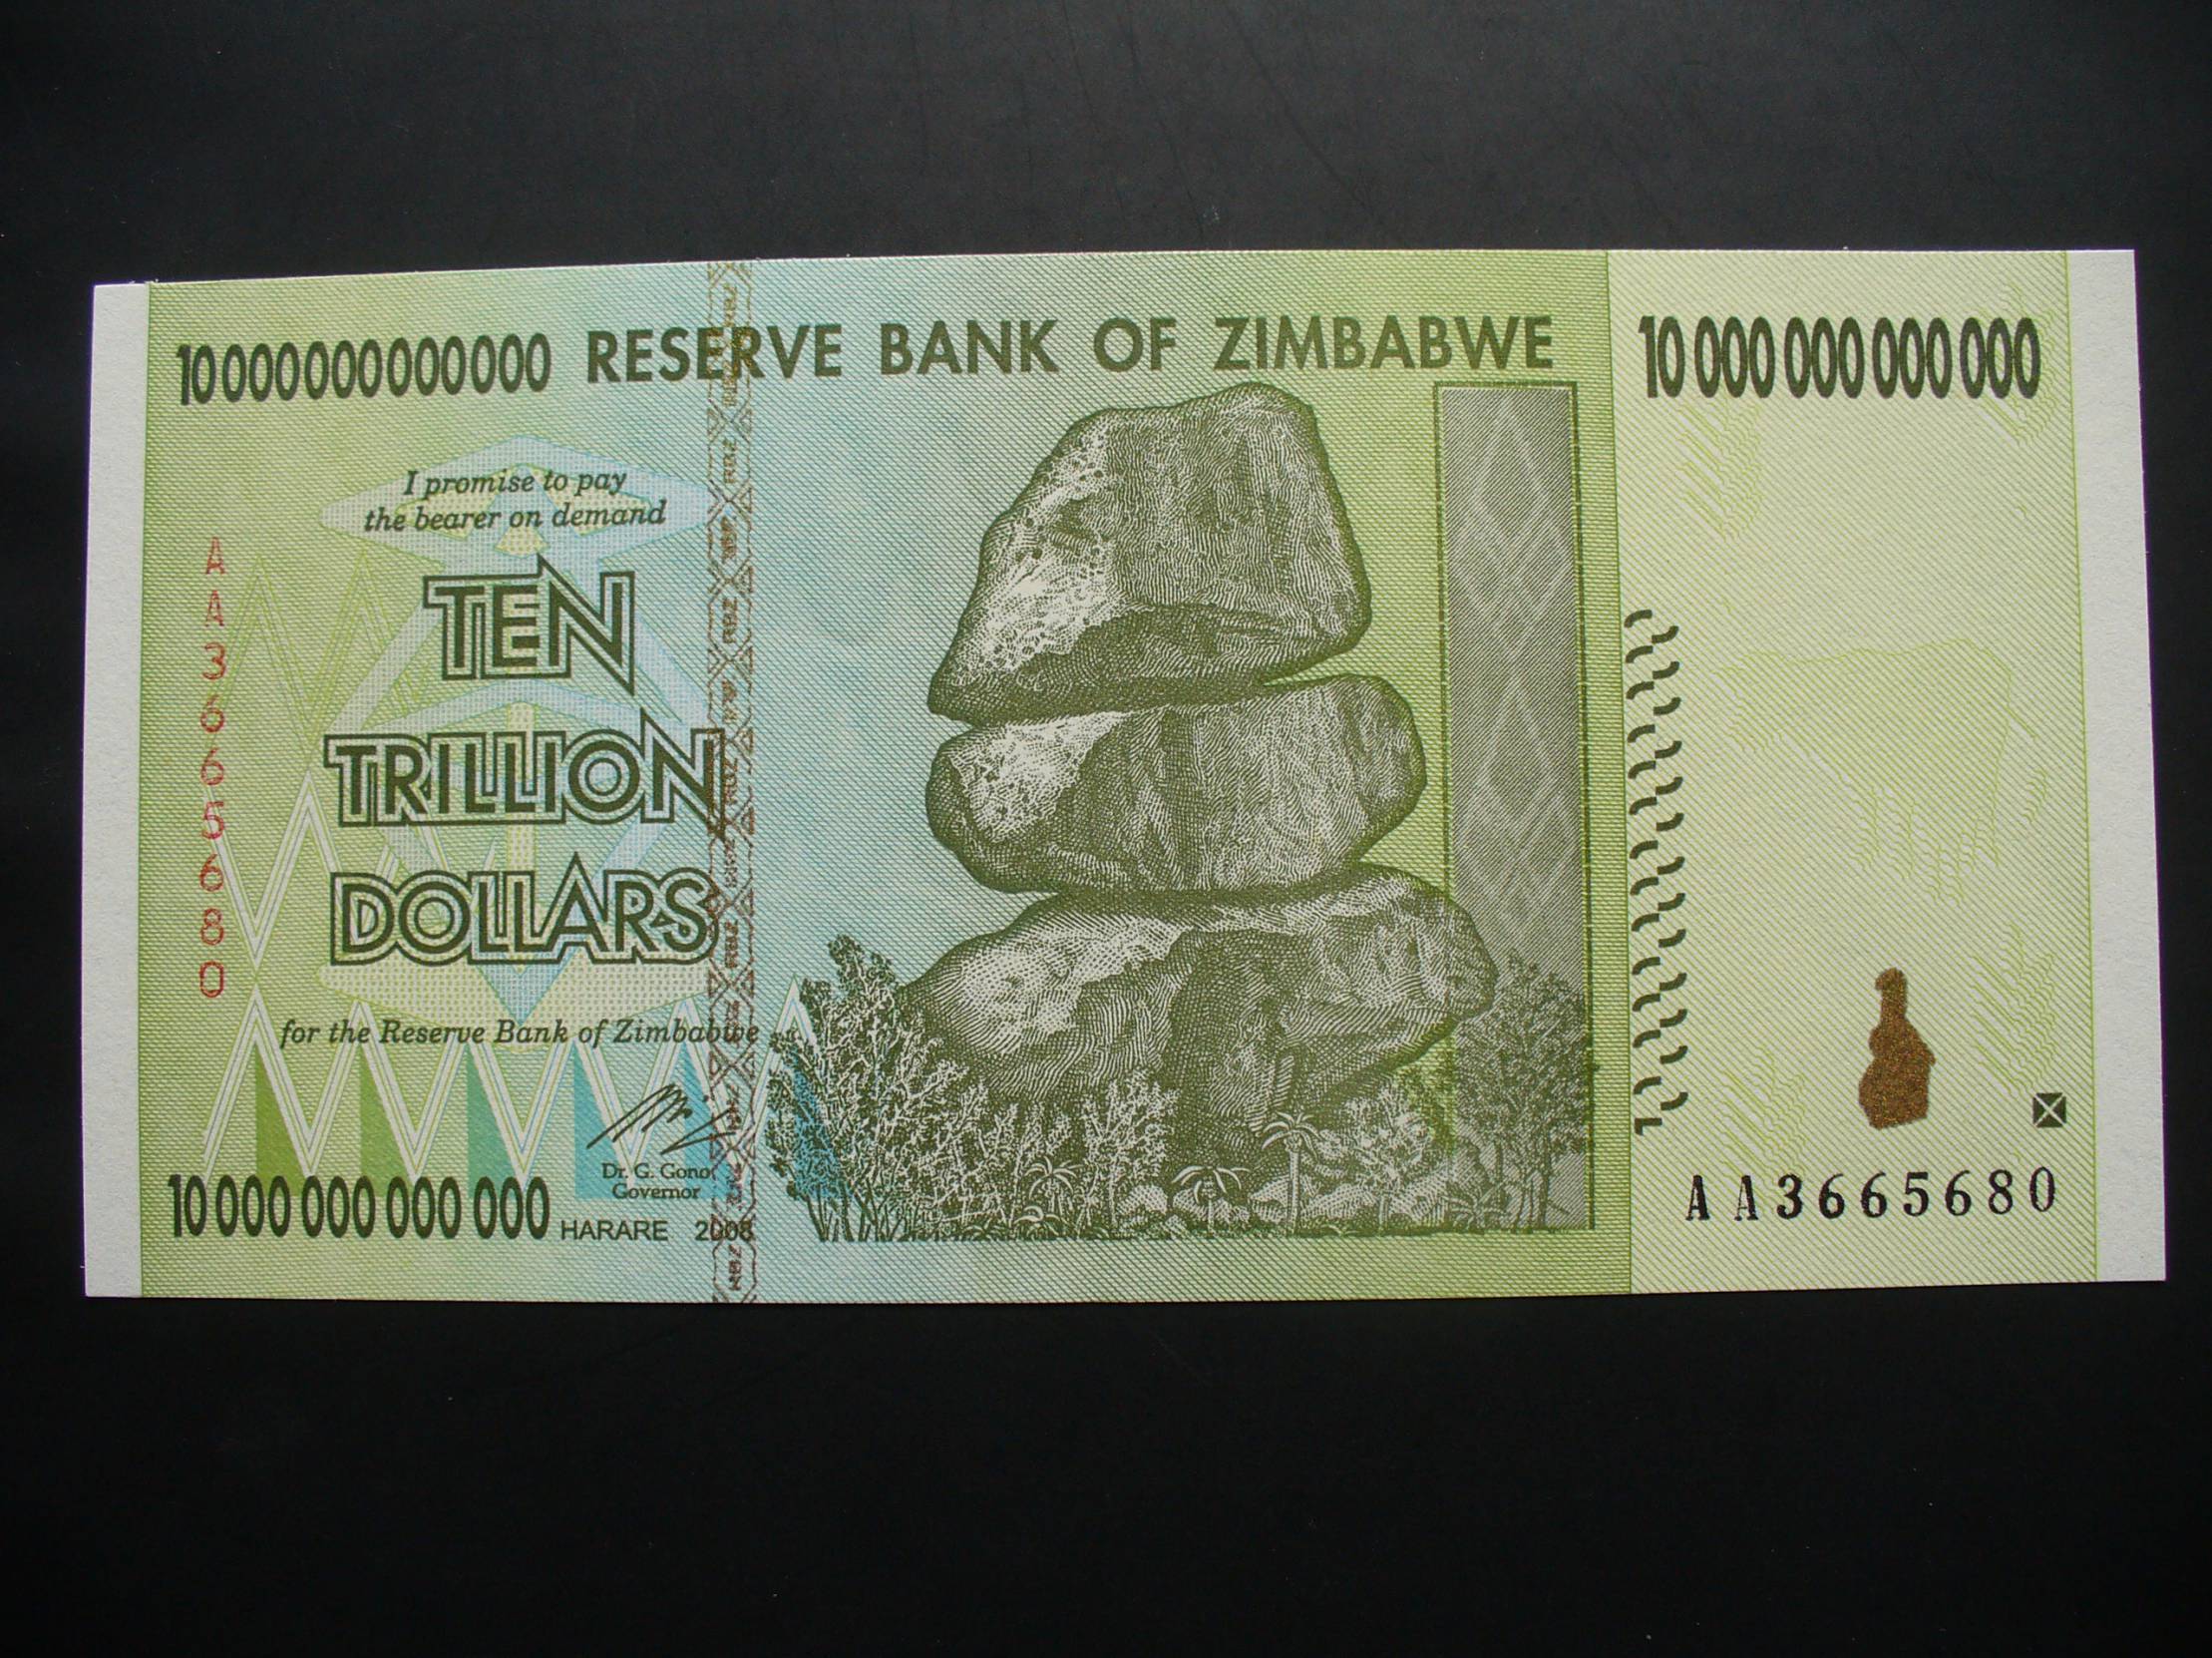 Купюра триллион рублей. Купюра 10 триллионов долларов Зимбабве. Купюра в 10 триллионов зимбабвийских долларов. Купюра 10000000000000 рублей. Купюры Зимбабве 500 триллионов долларов.